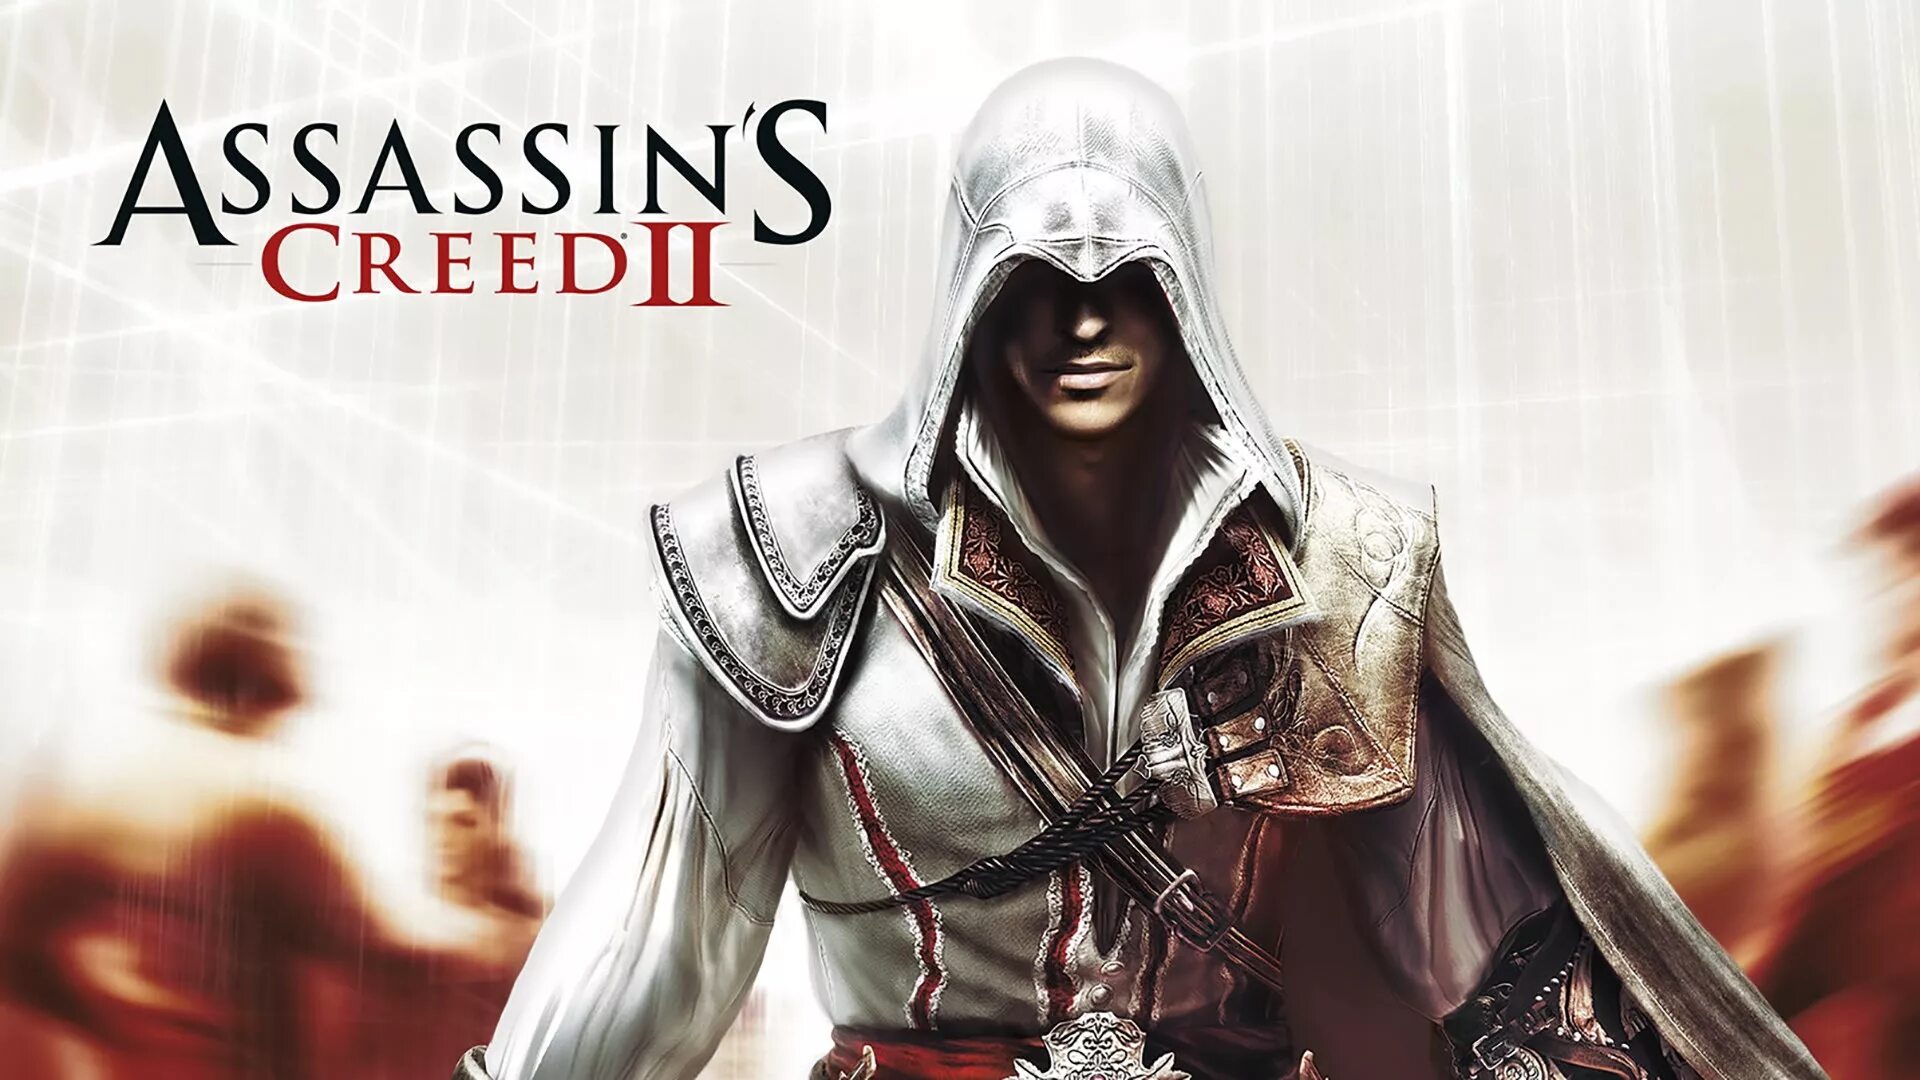 Assassin’s Creed the Ezio collection. Эцио ассасин 2 Постер. Ассасин Крид 2 Делюкс эдишн. Ассасин Крид 2 Эцио. Assassin's creed soundtrack